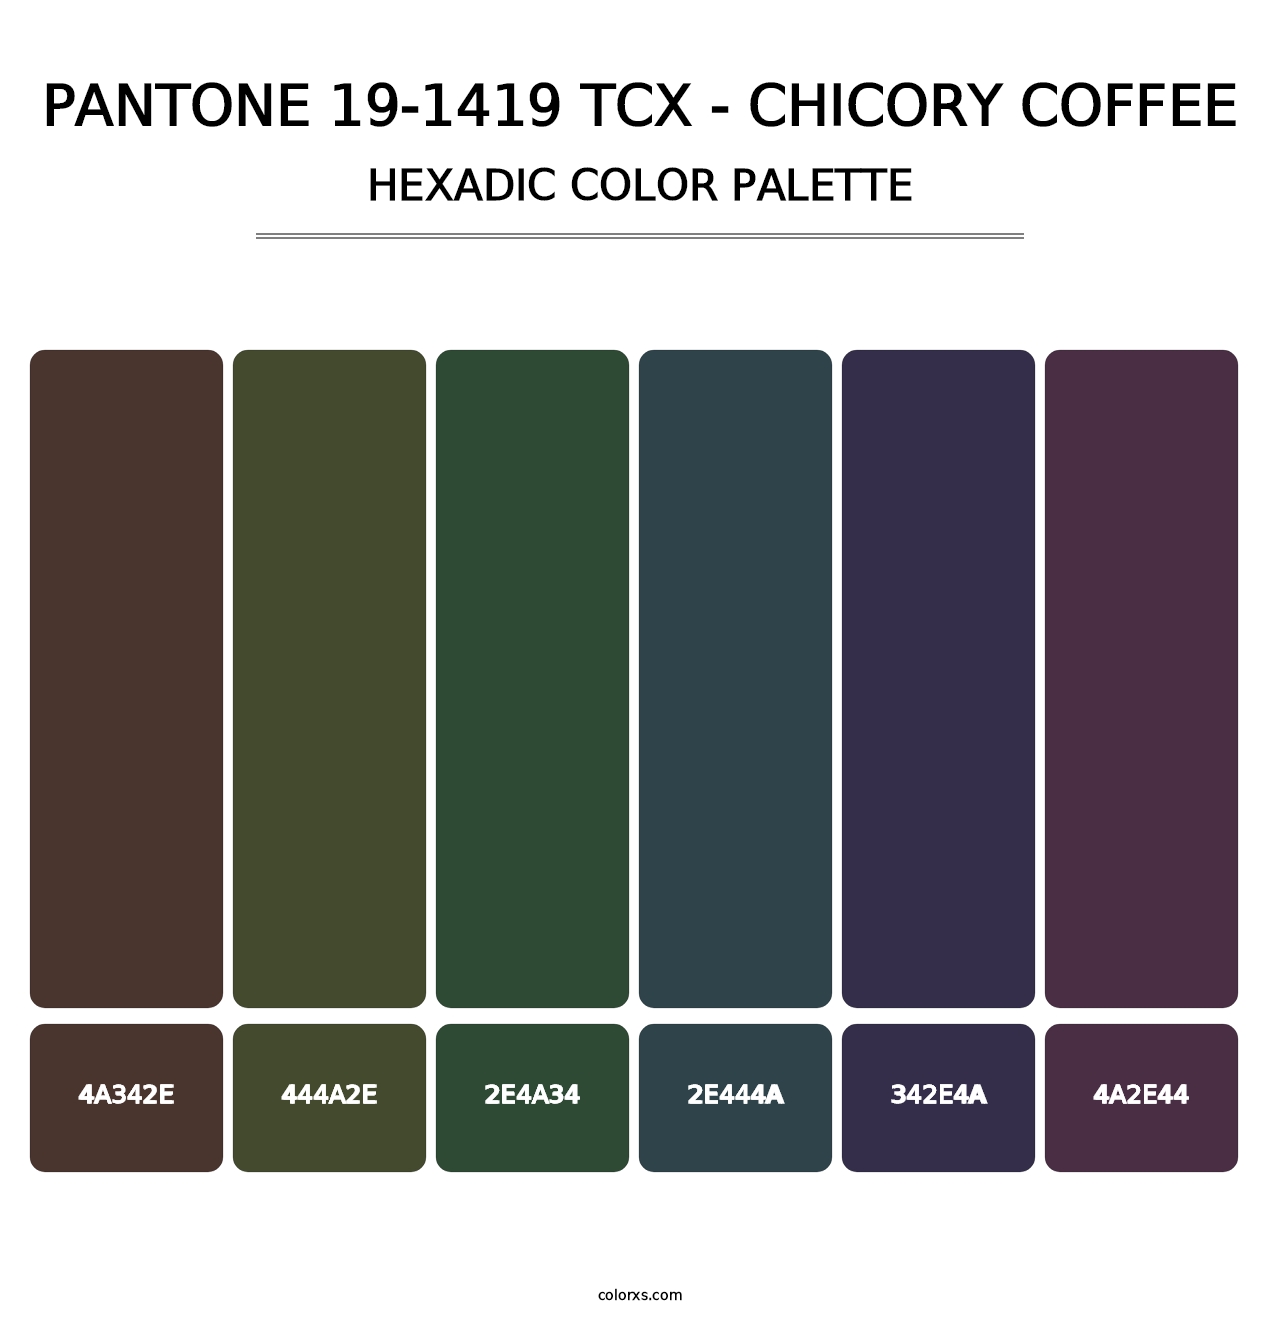 PANTONE 19-1419 TCX - Chicory Coffee - Hexadic Color Palette